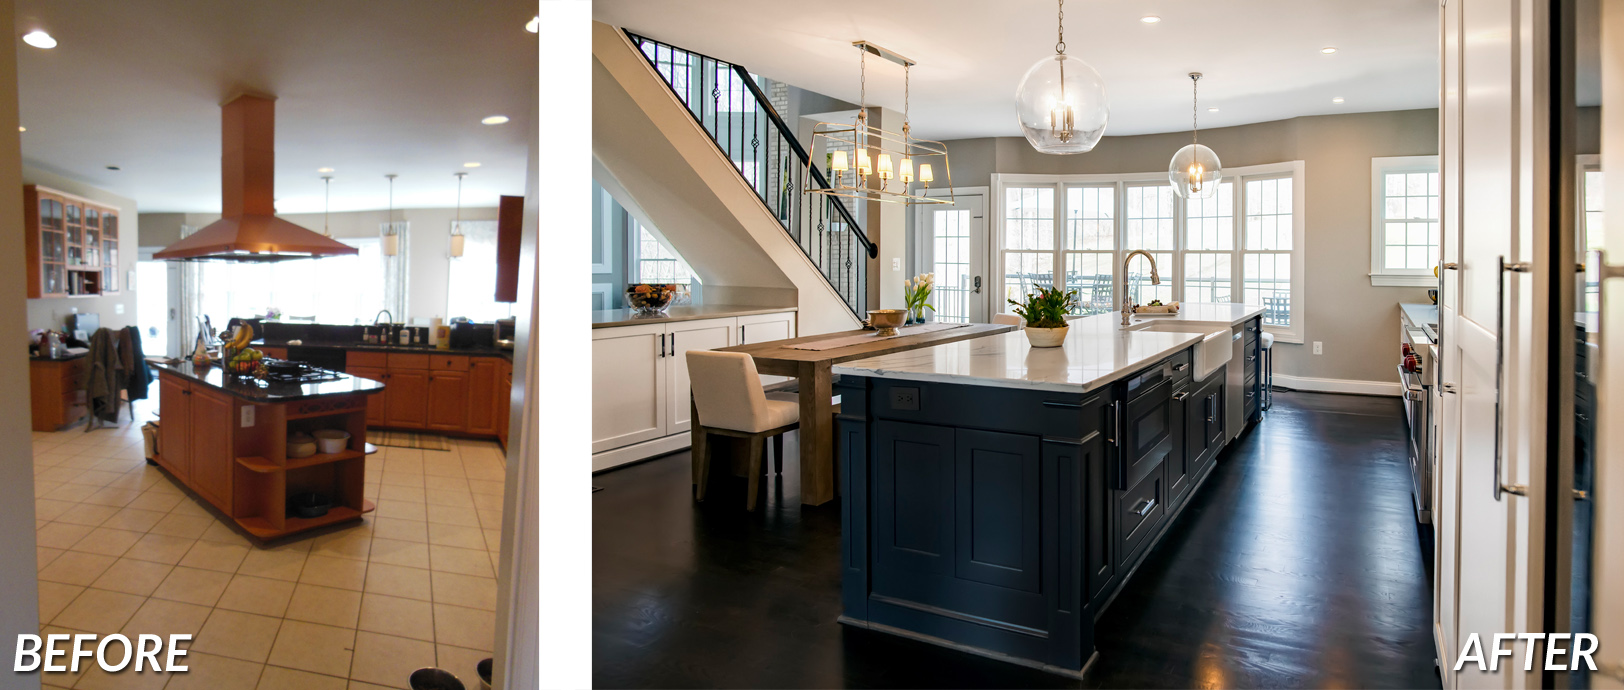 BOWA Design Build - Leesburg Kitchen Renovation Before & After